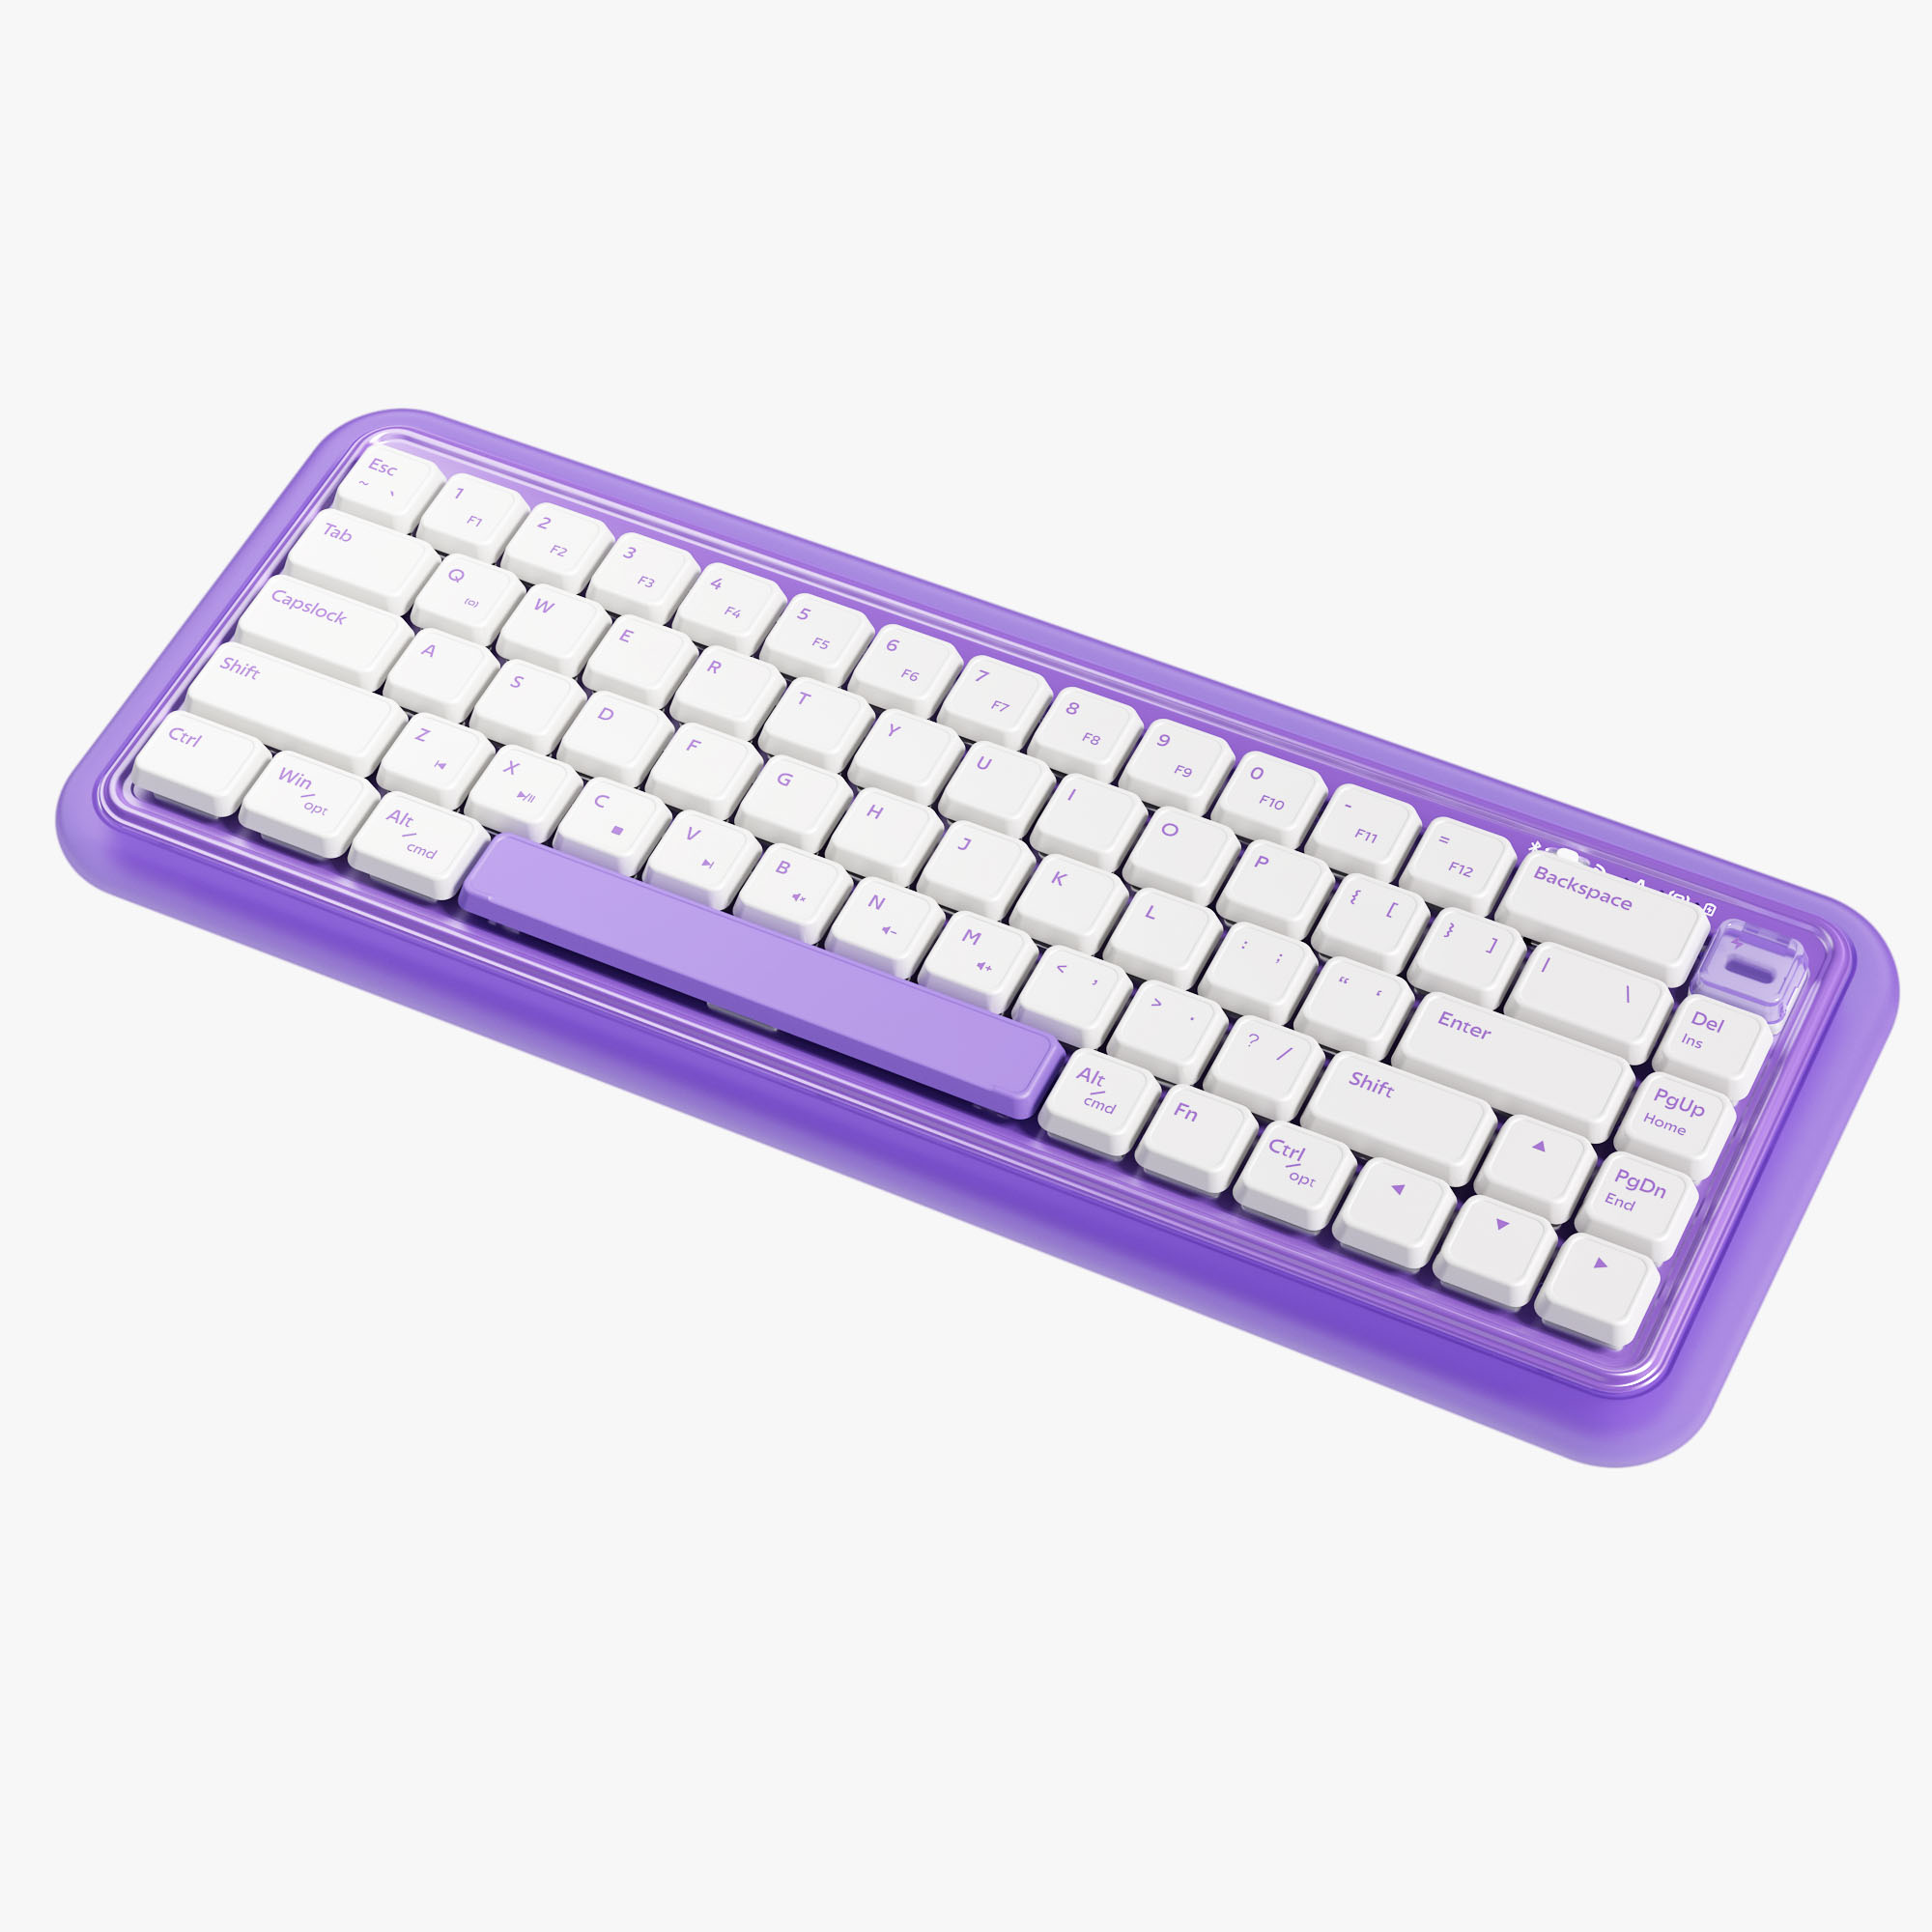 Durgod S230 Floyd | Purple Mechanical Keyboard with Aesthetics and Creativity